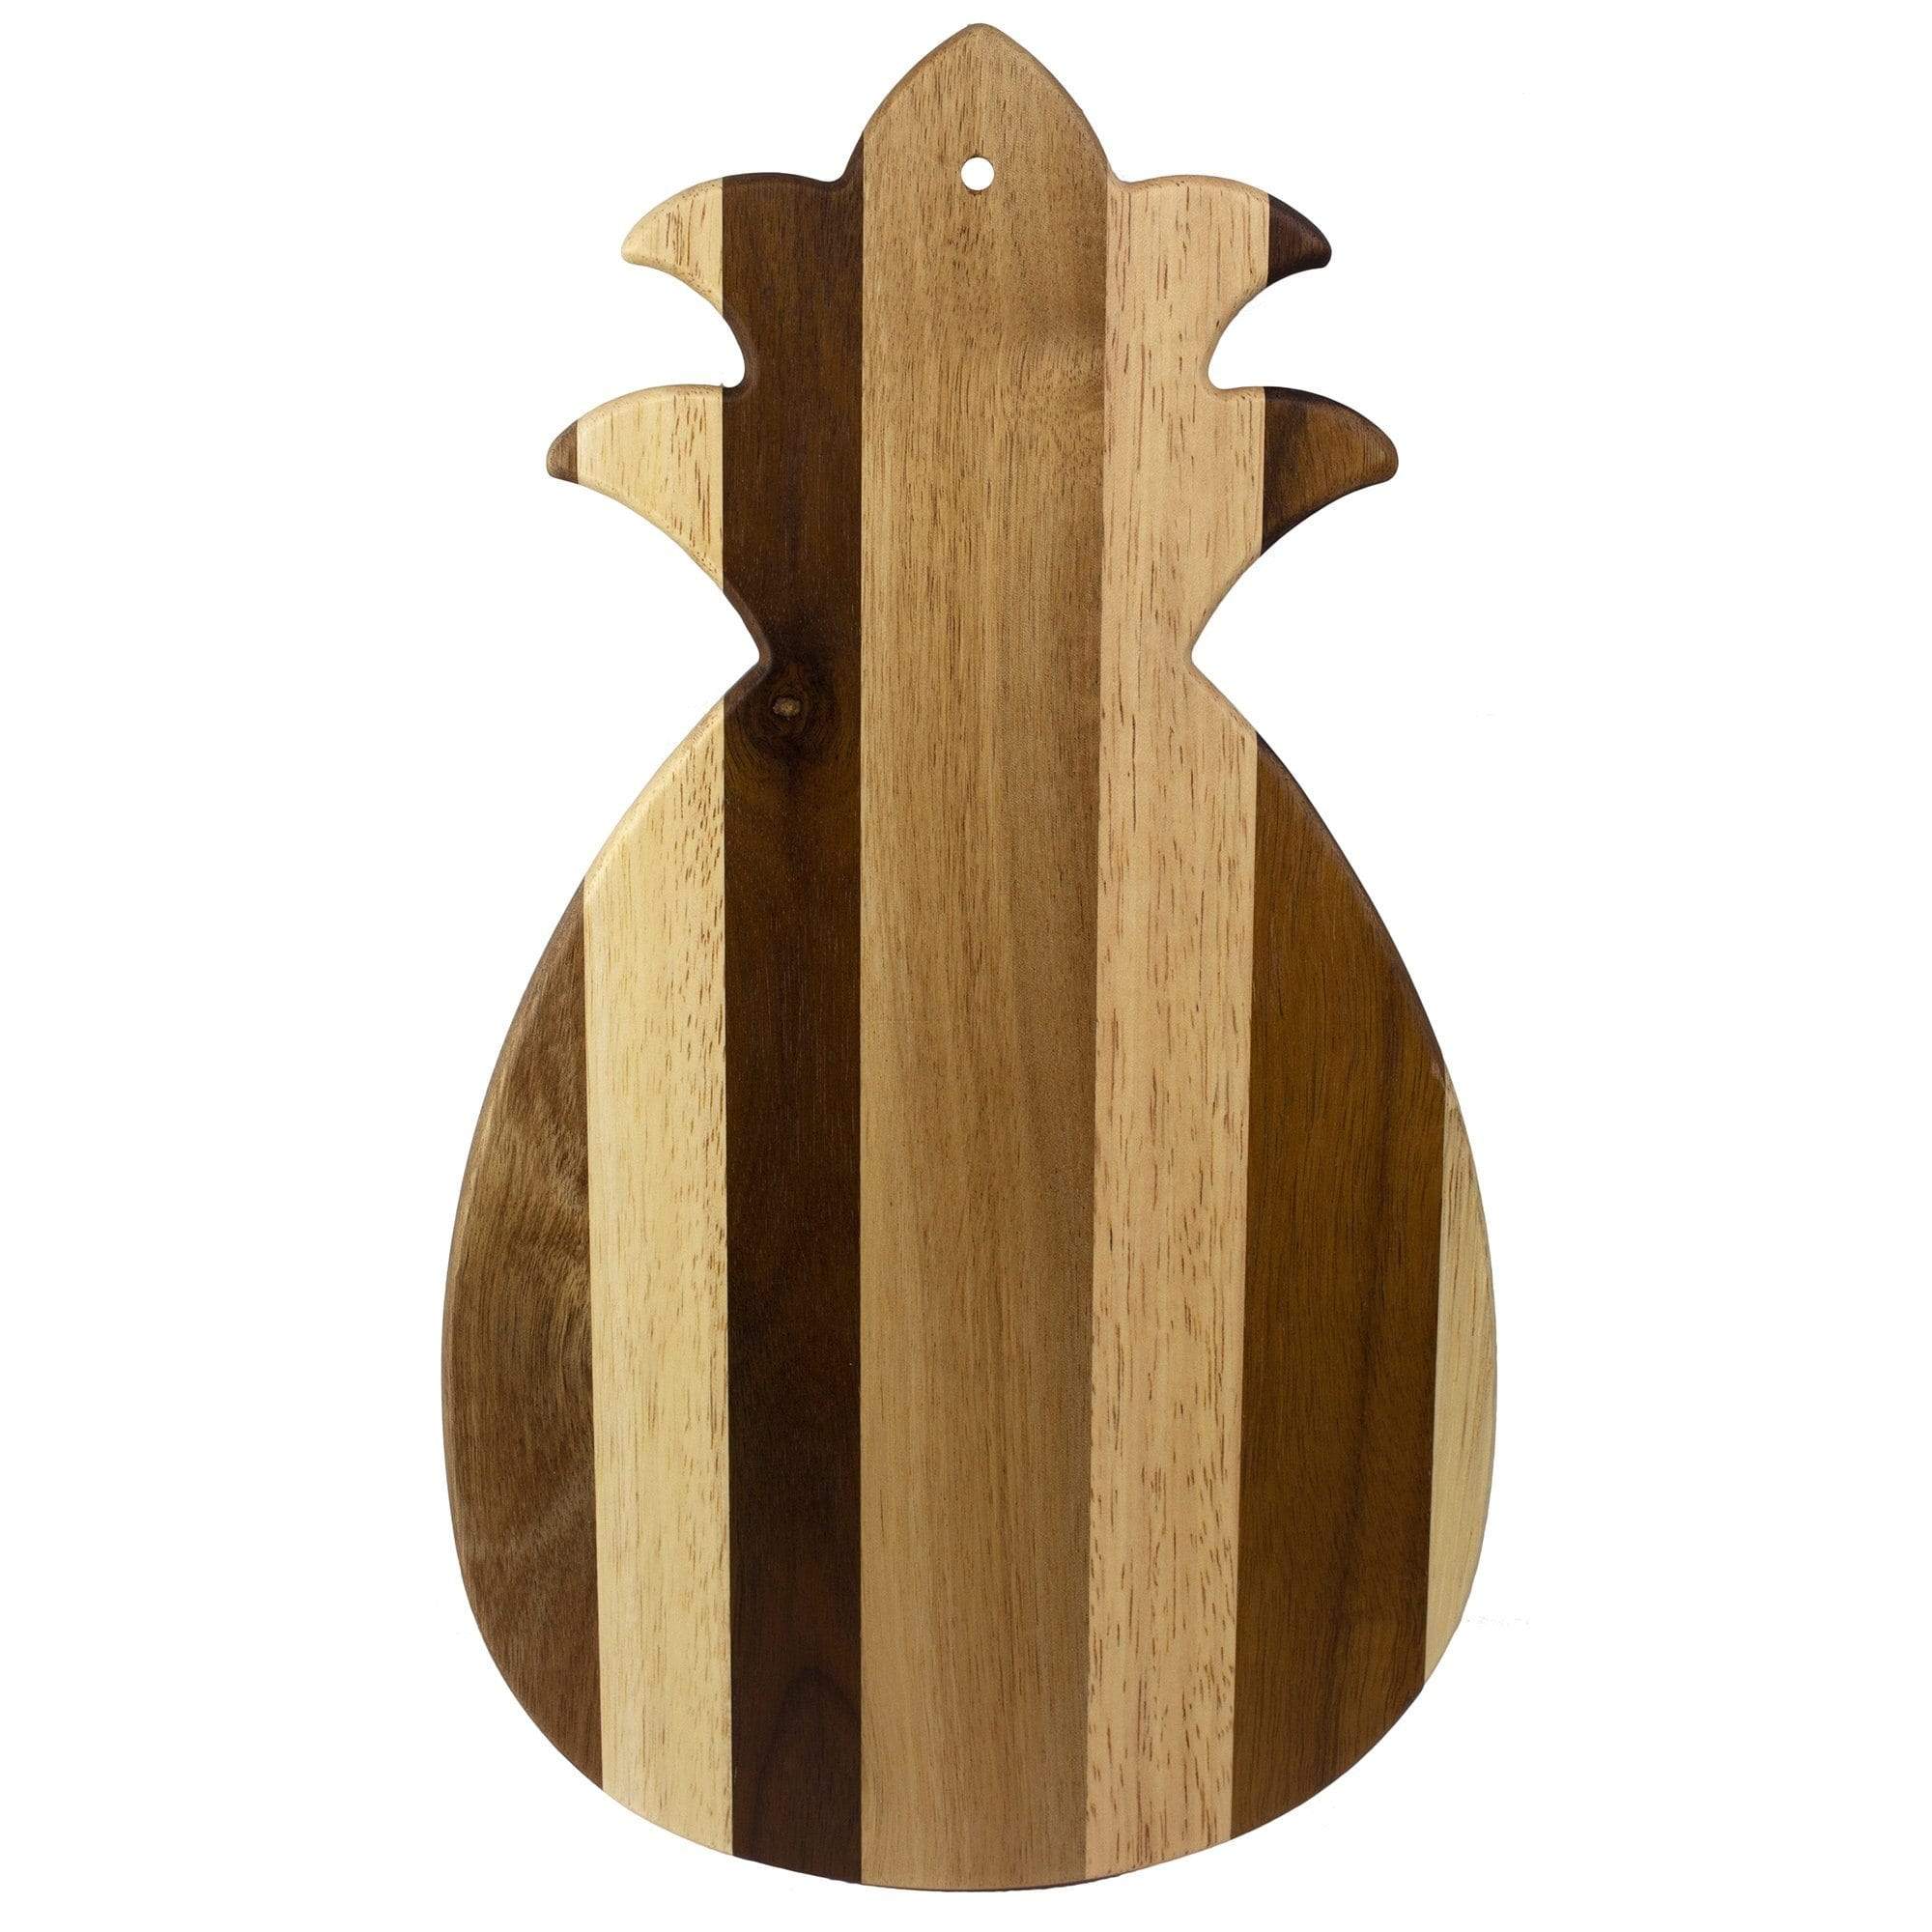 White Paddle Cutting Board w/ Handle (7 x 14 x 1/2)